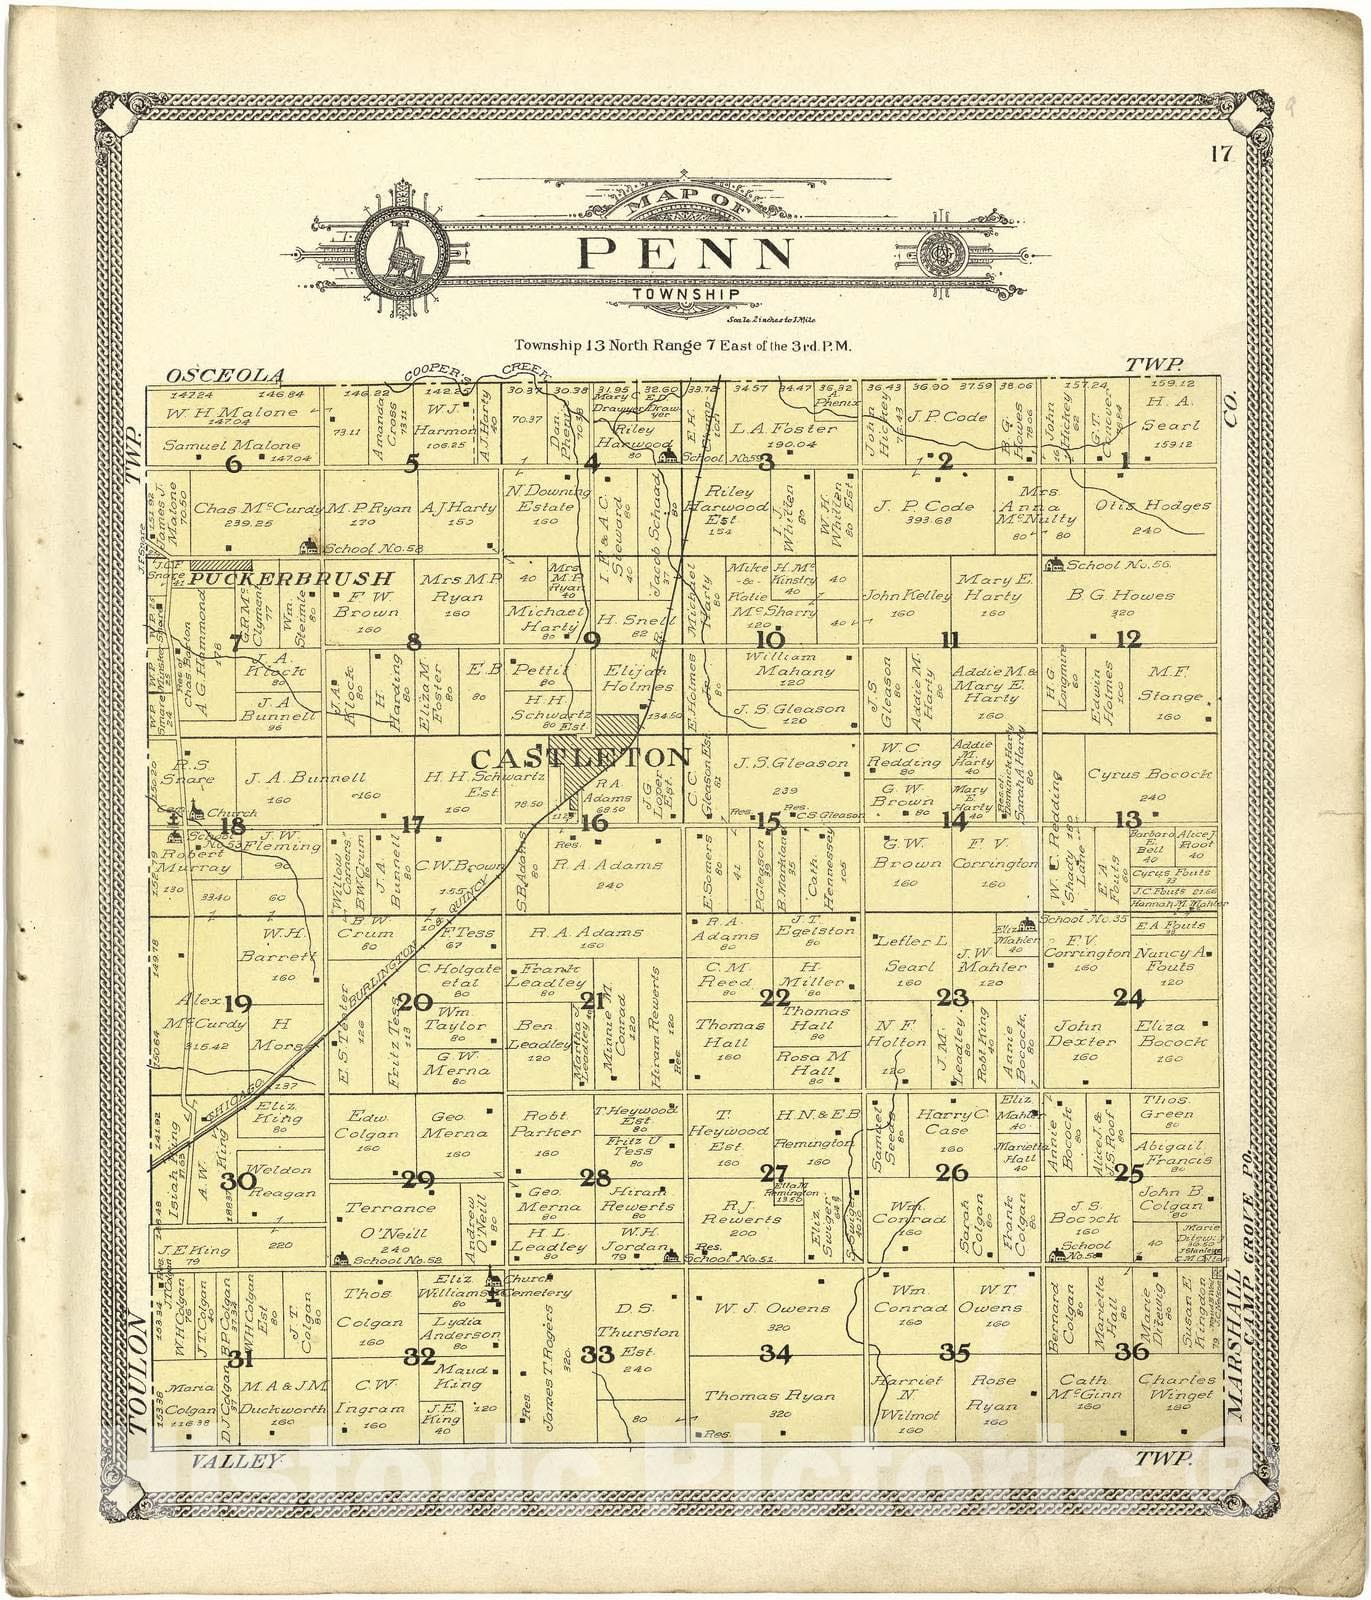 Historic 1907 Map - Standard Atlas of Stark County, Illinois - Map of Penn Township